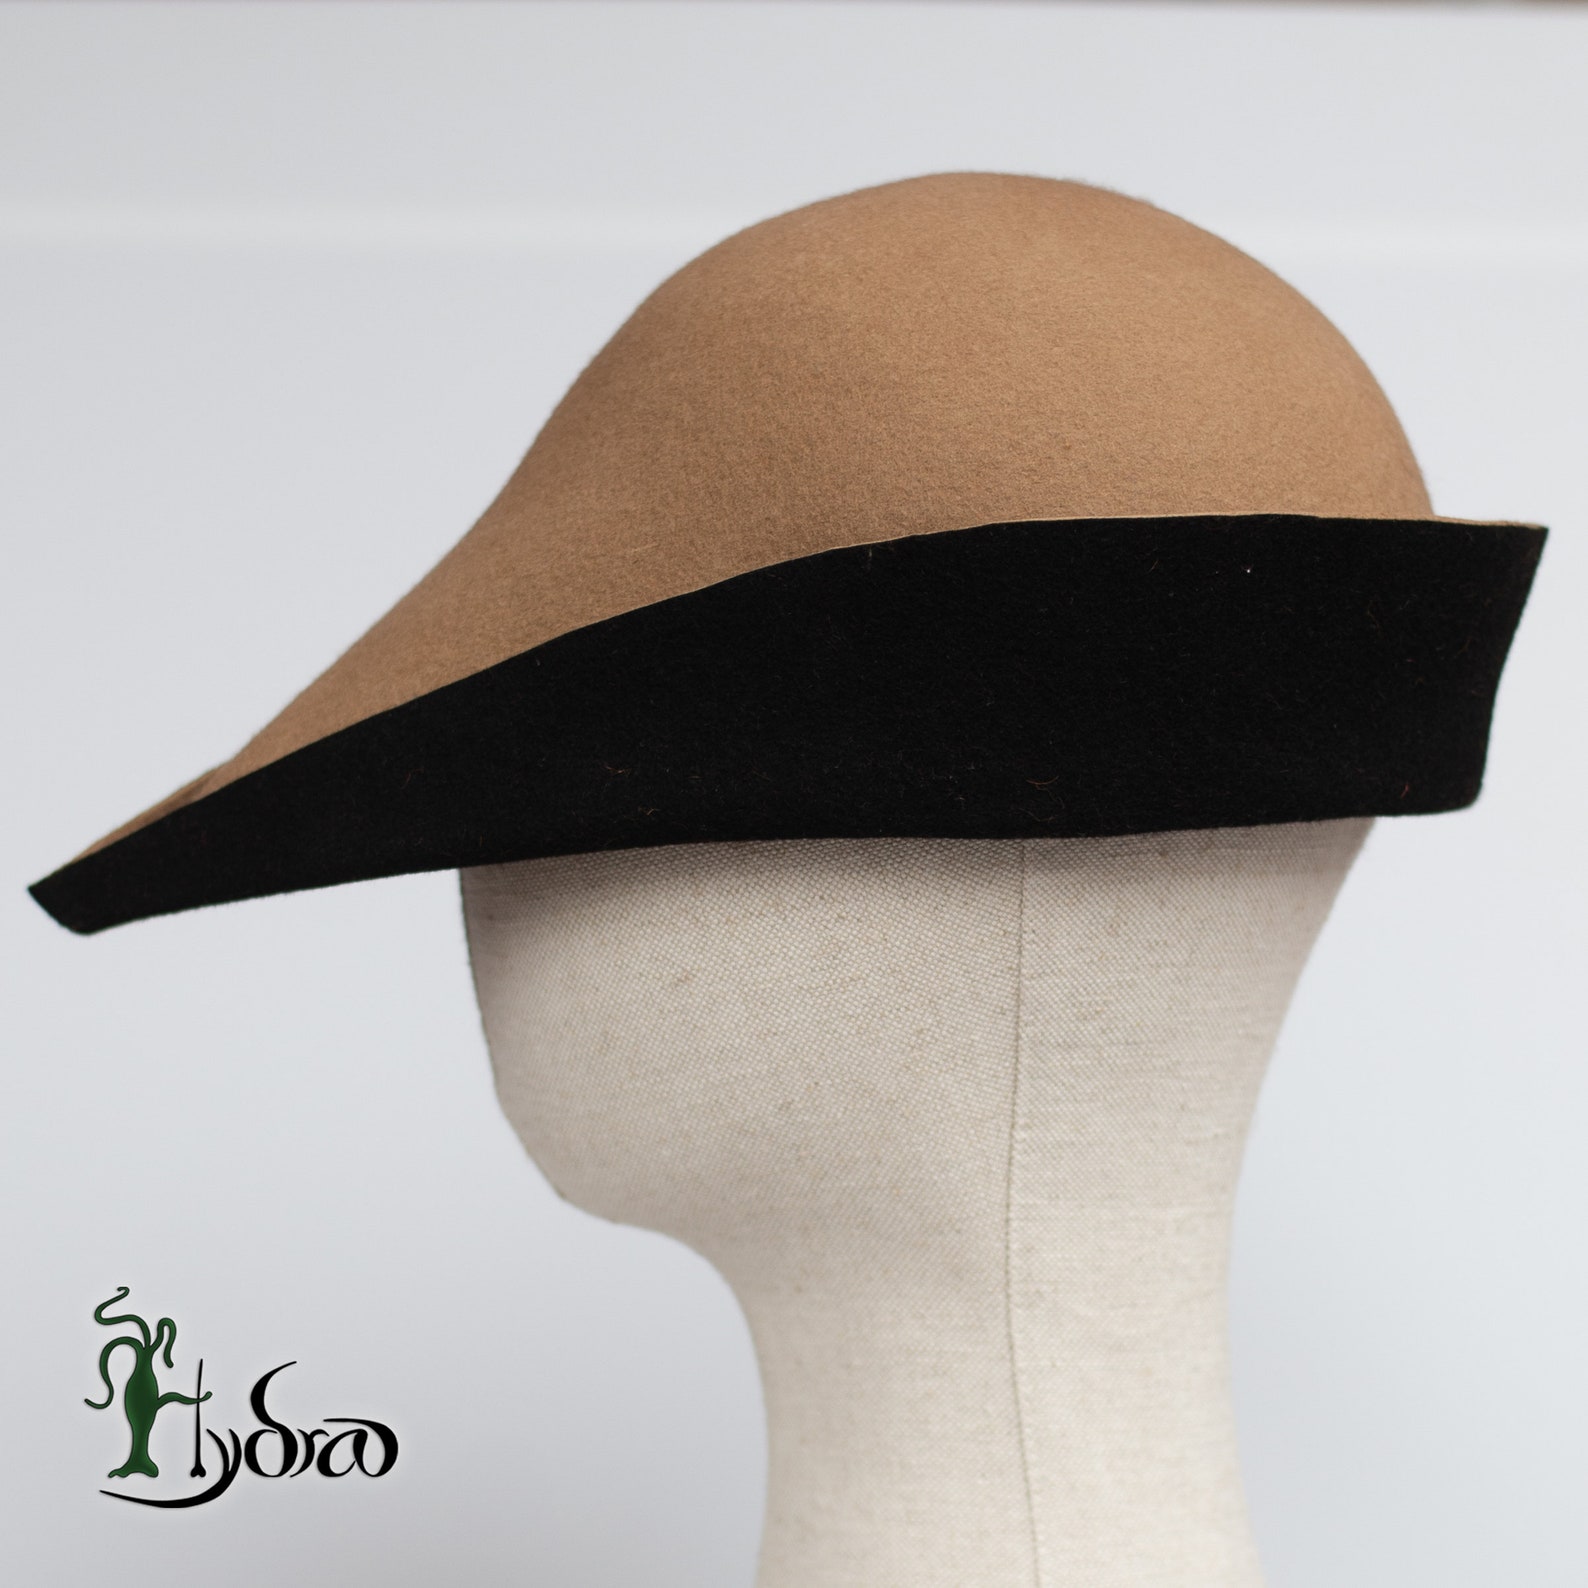 Bycocket medieval hat bicolored fleece felt cap 14th century | Etsy